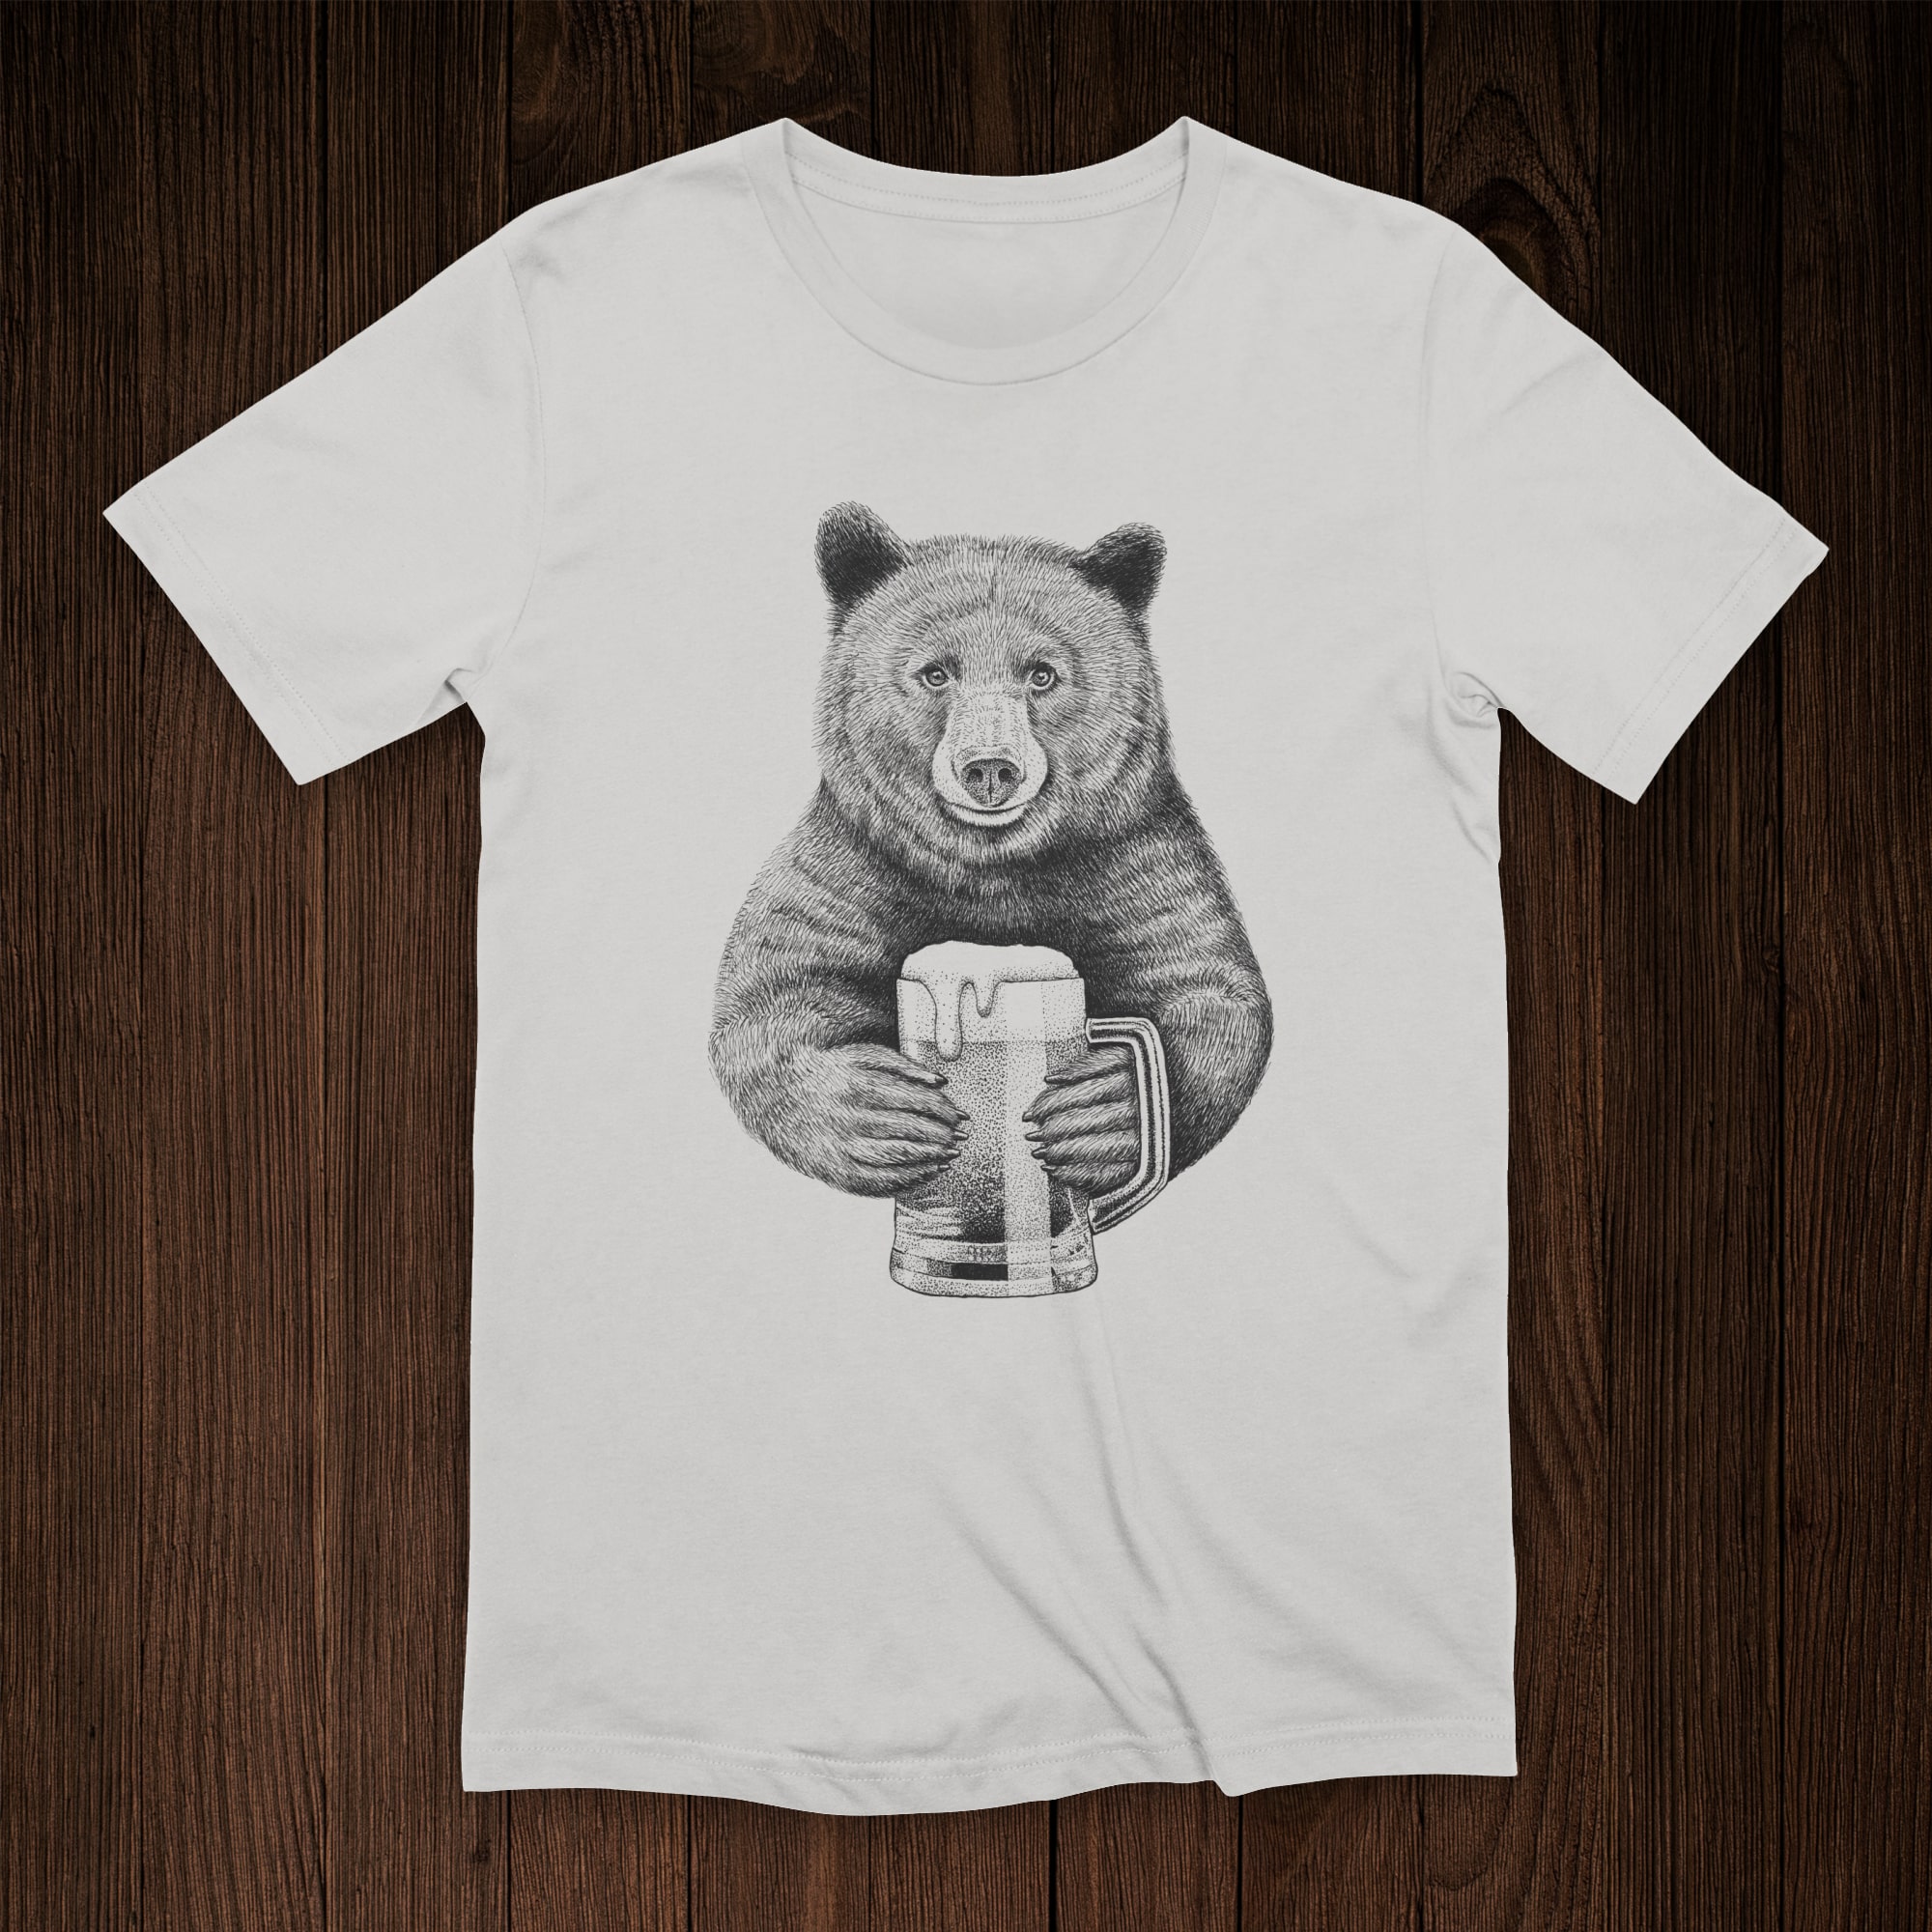 Bear Beer T-Shirt (Large)